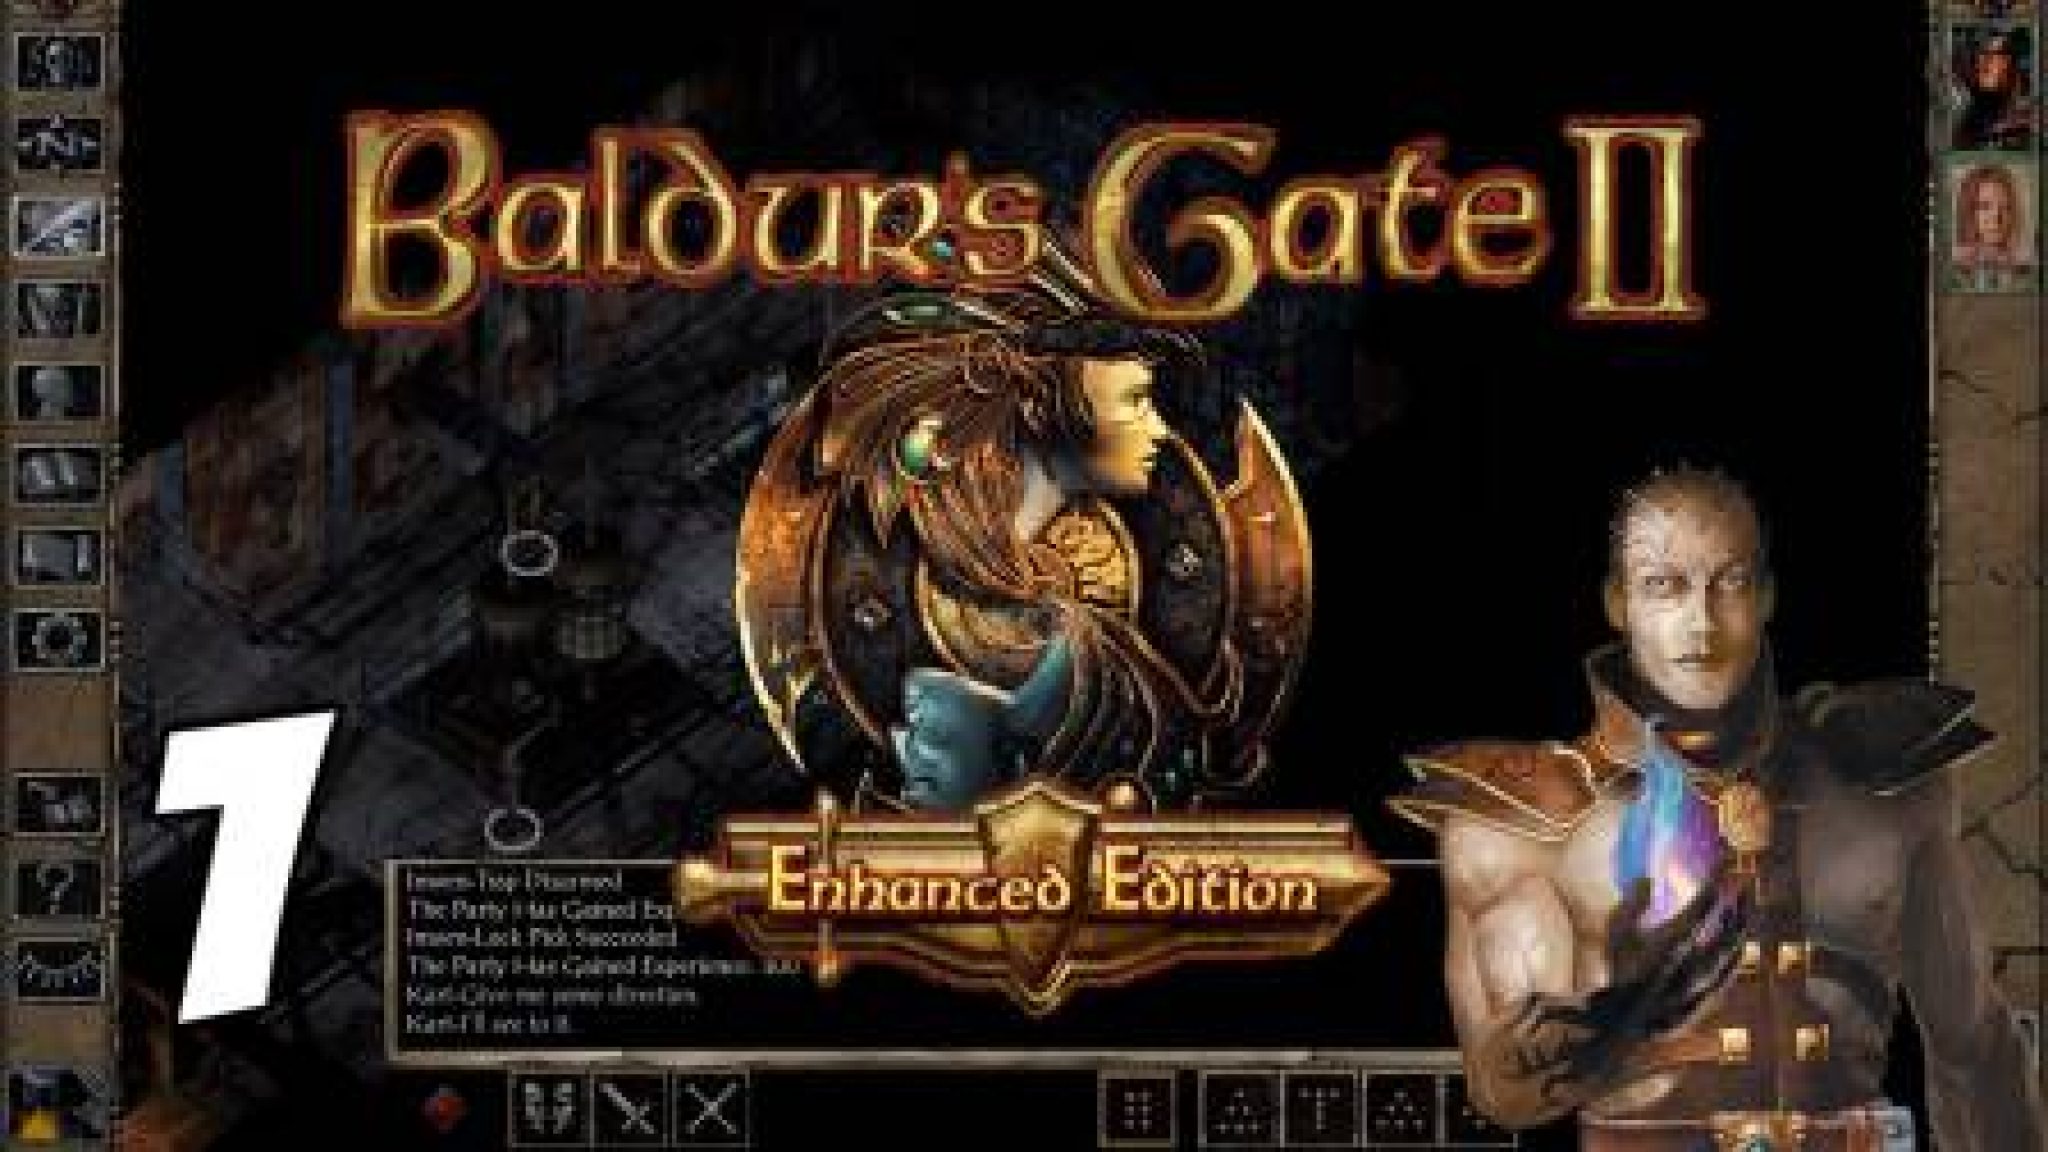 download the new version for ipod Baldur’s Gate III